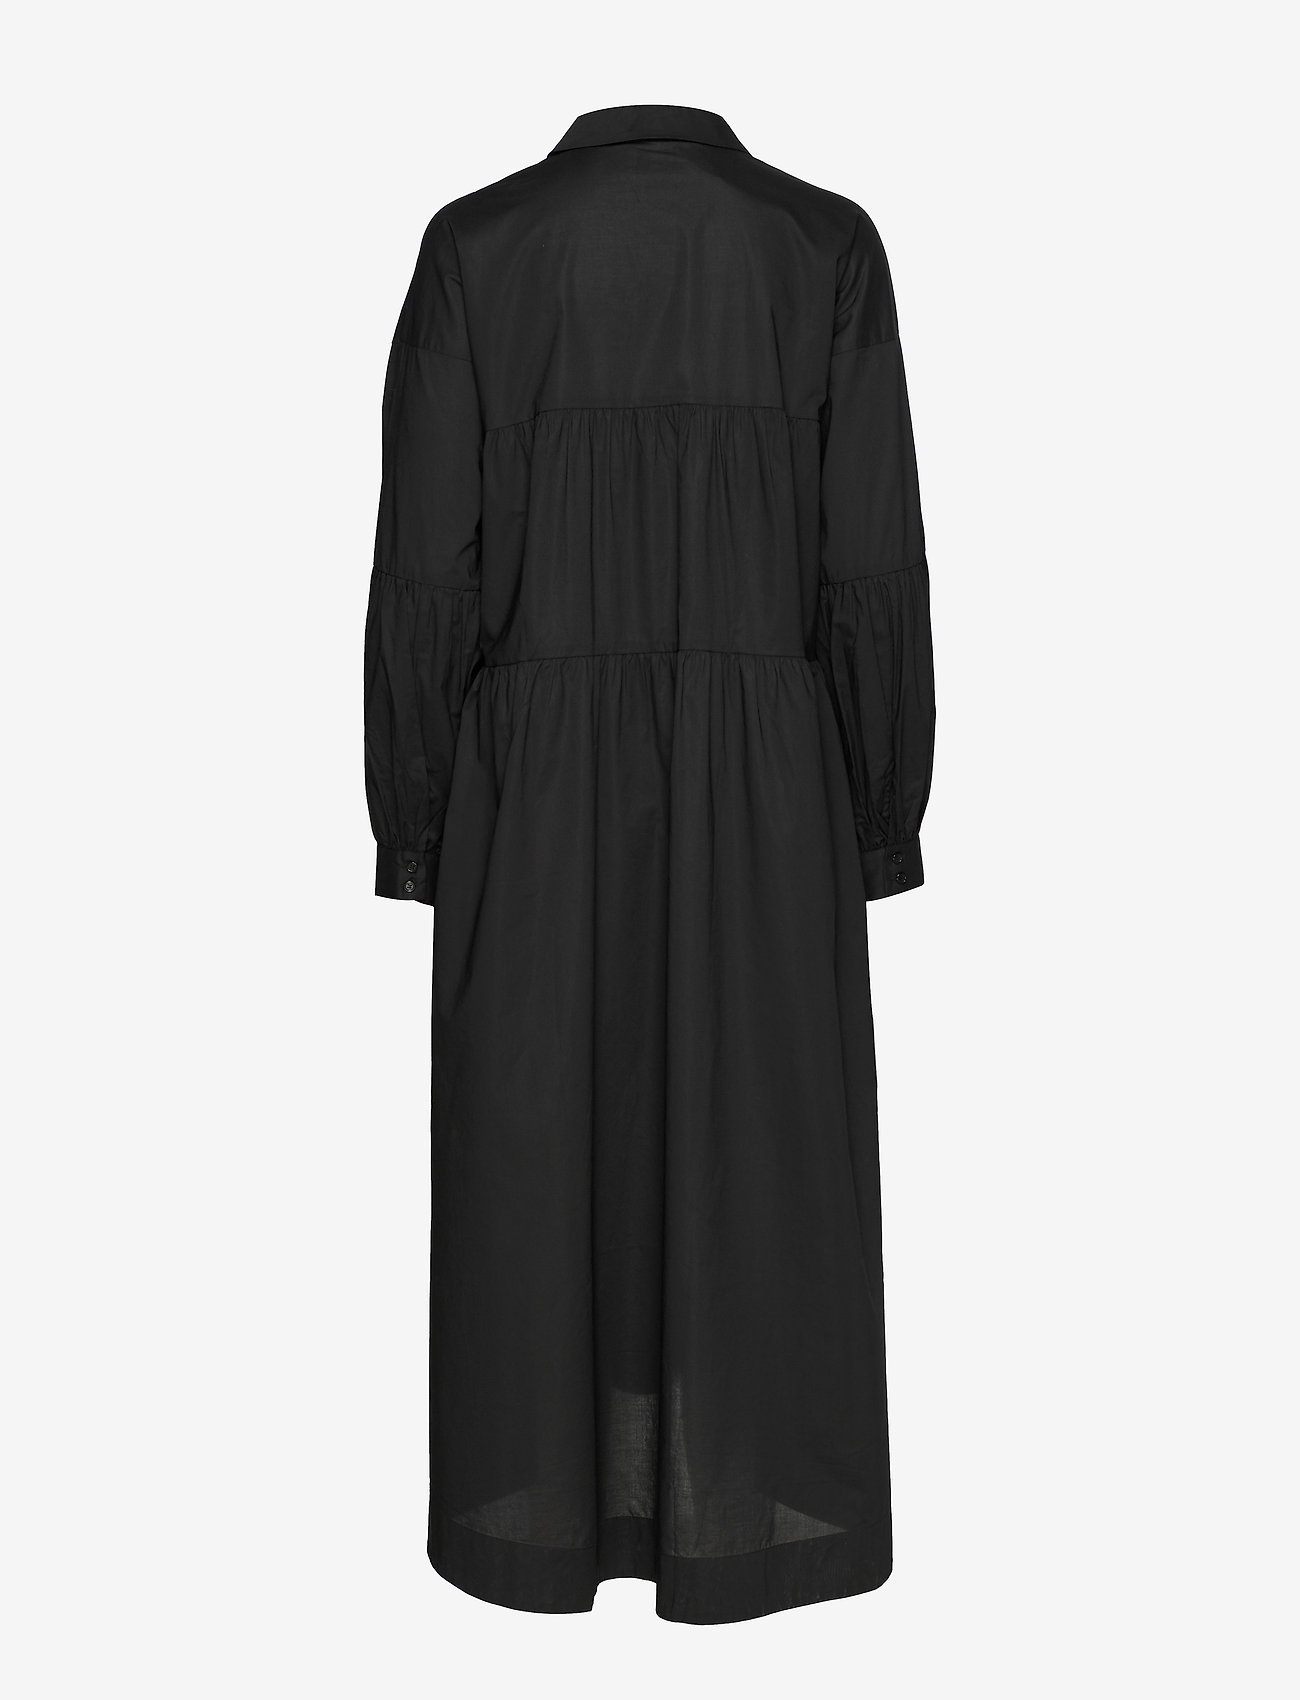 Just Female - Mandy maxi dress - midi kjoler - black - 1